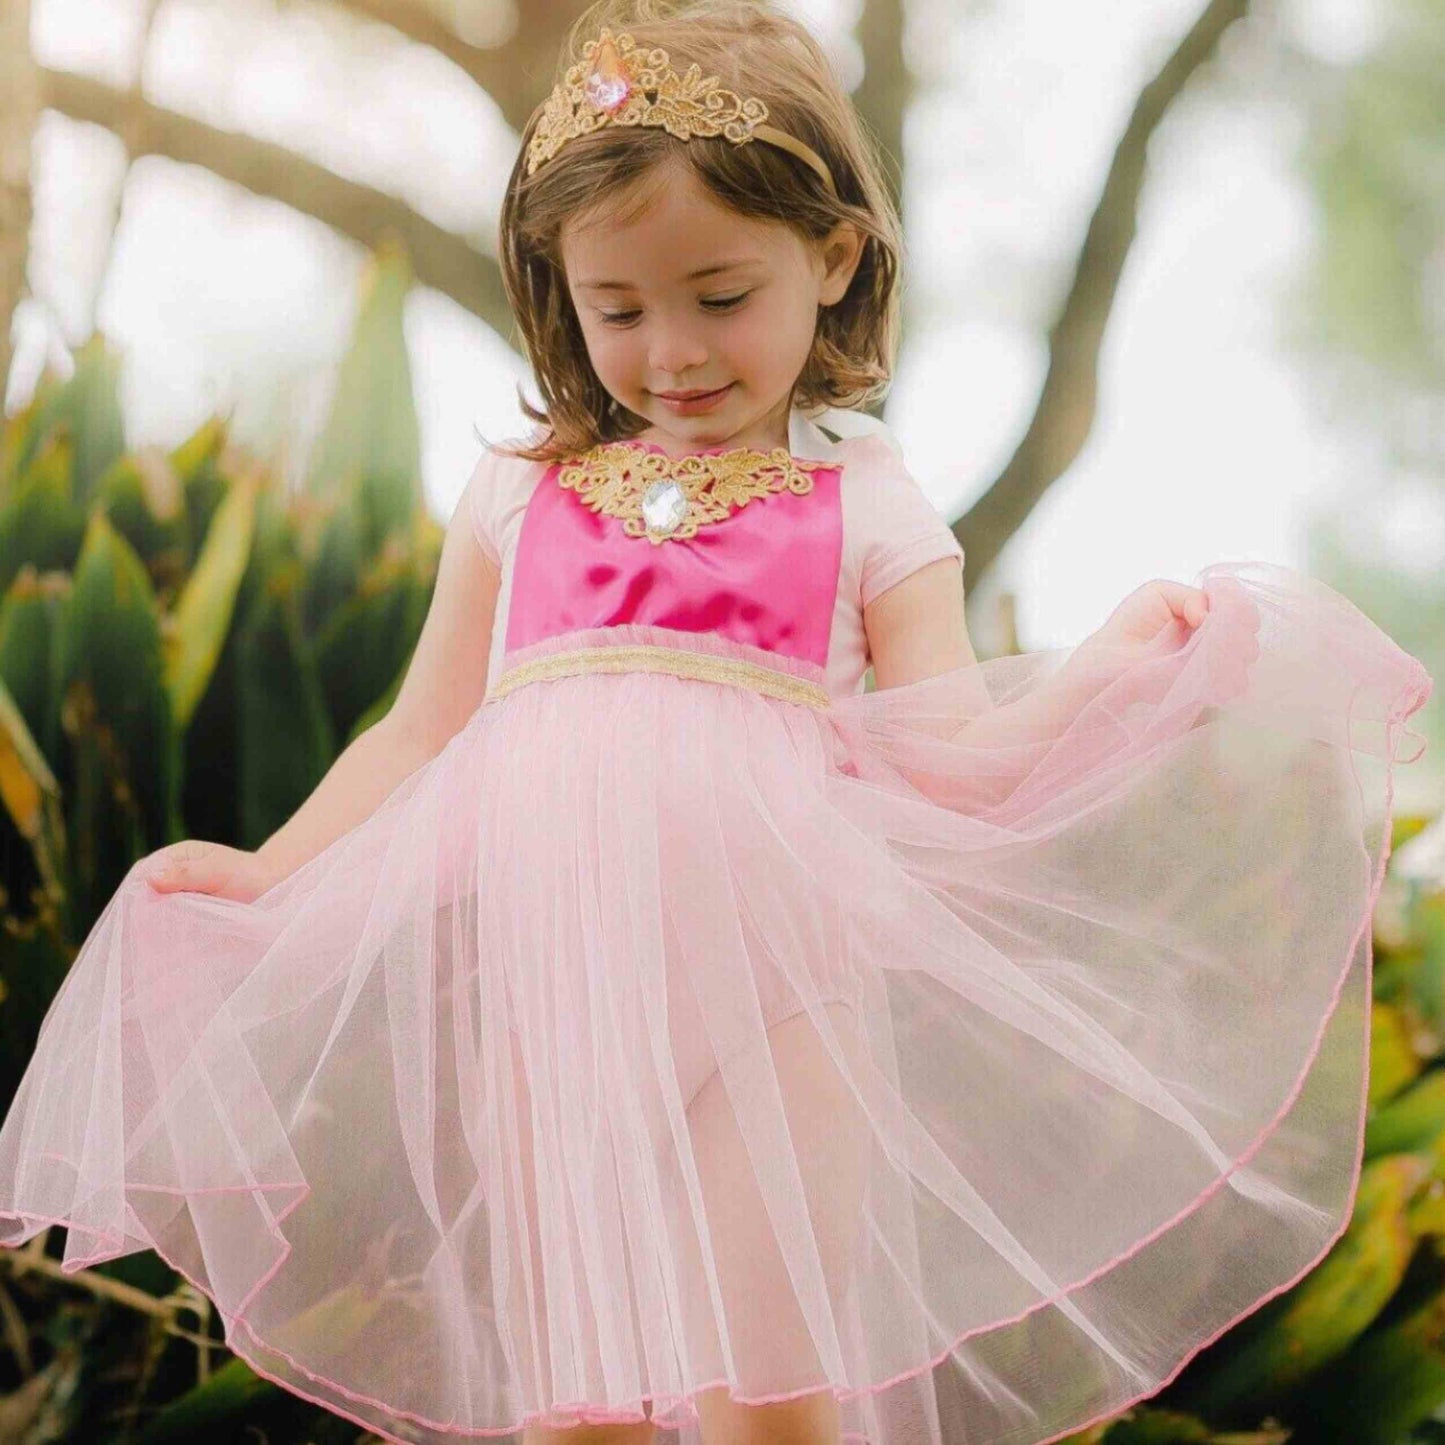 a little girl wearing a pink dress and a tiara